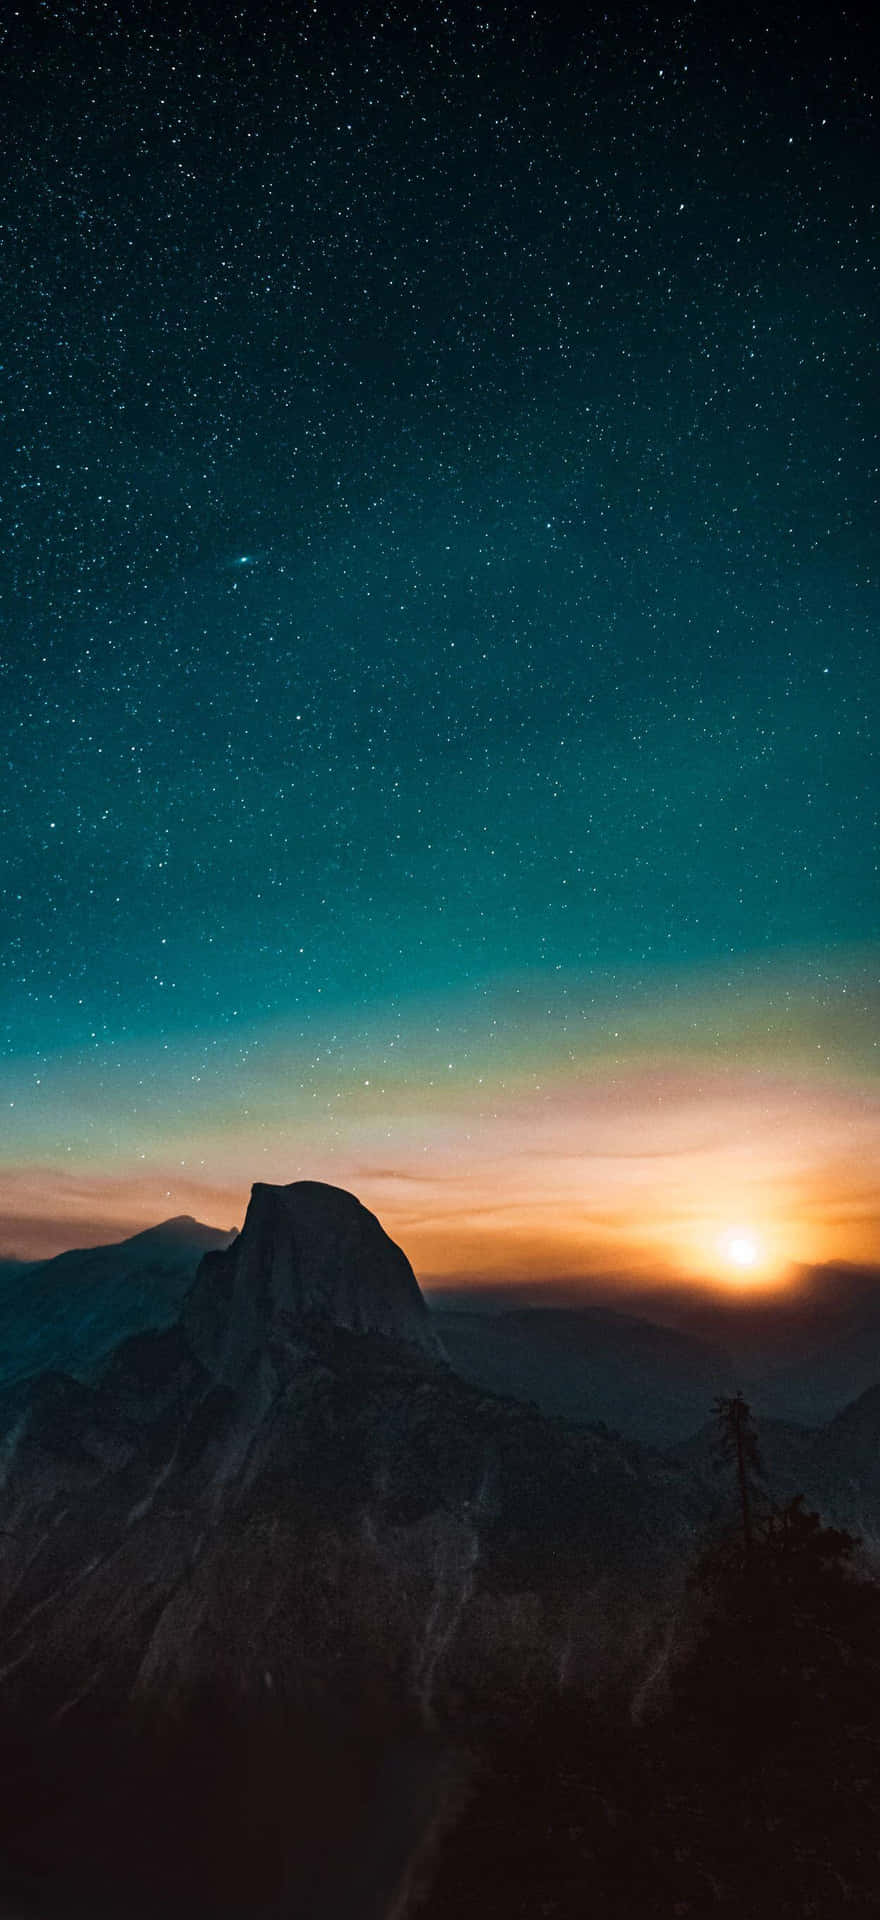 IPhones XS Max Starry Sunset Landscape Wallpaper